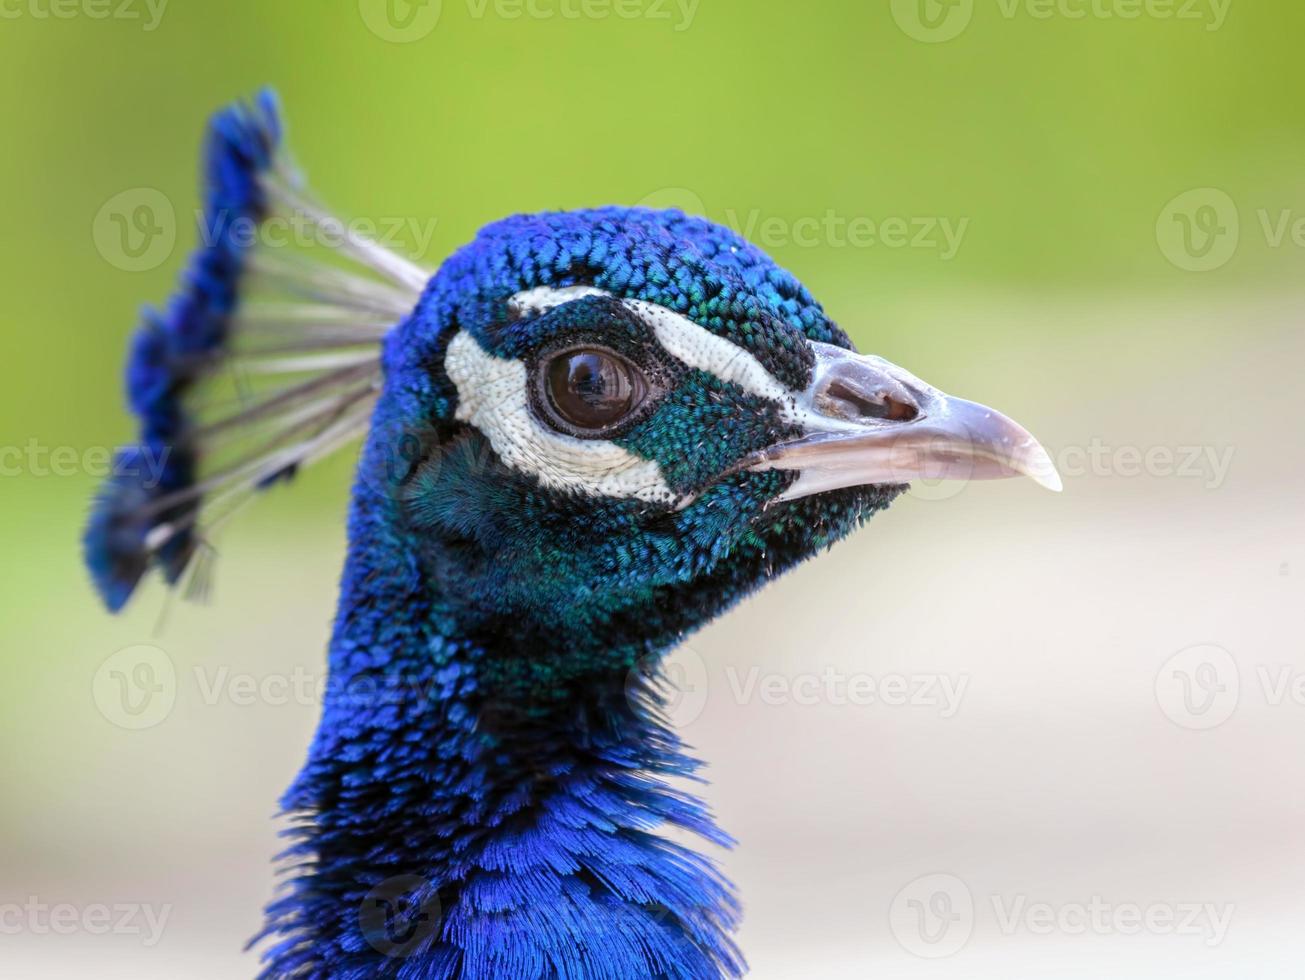 Peacock head portrait photo